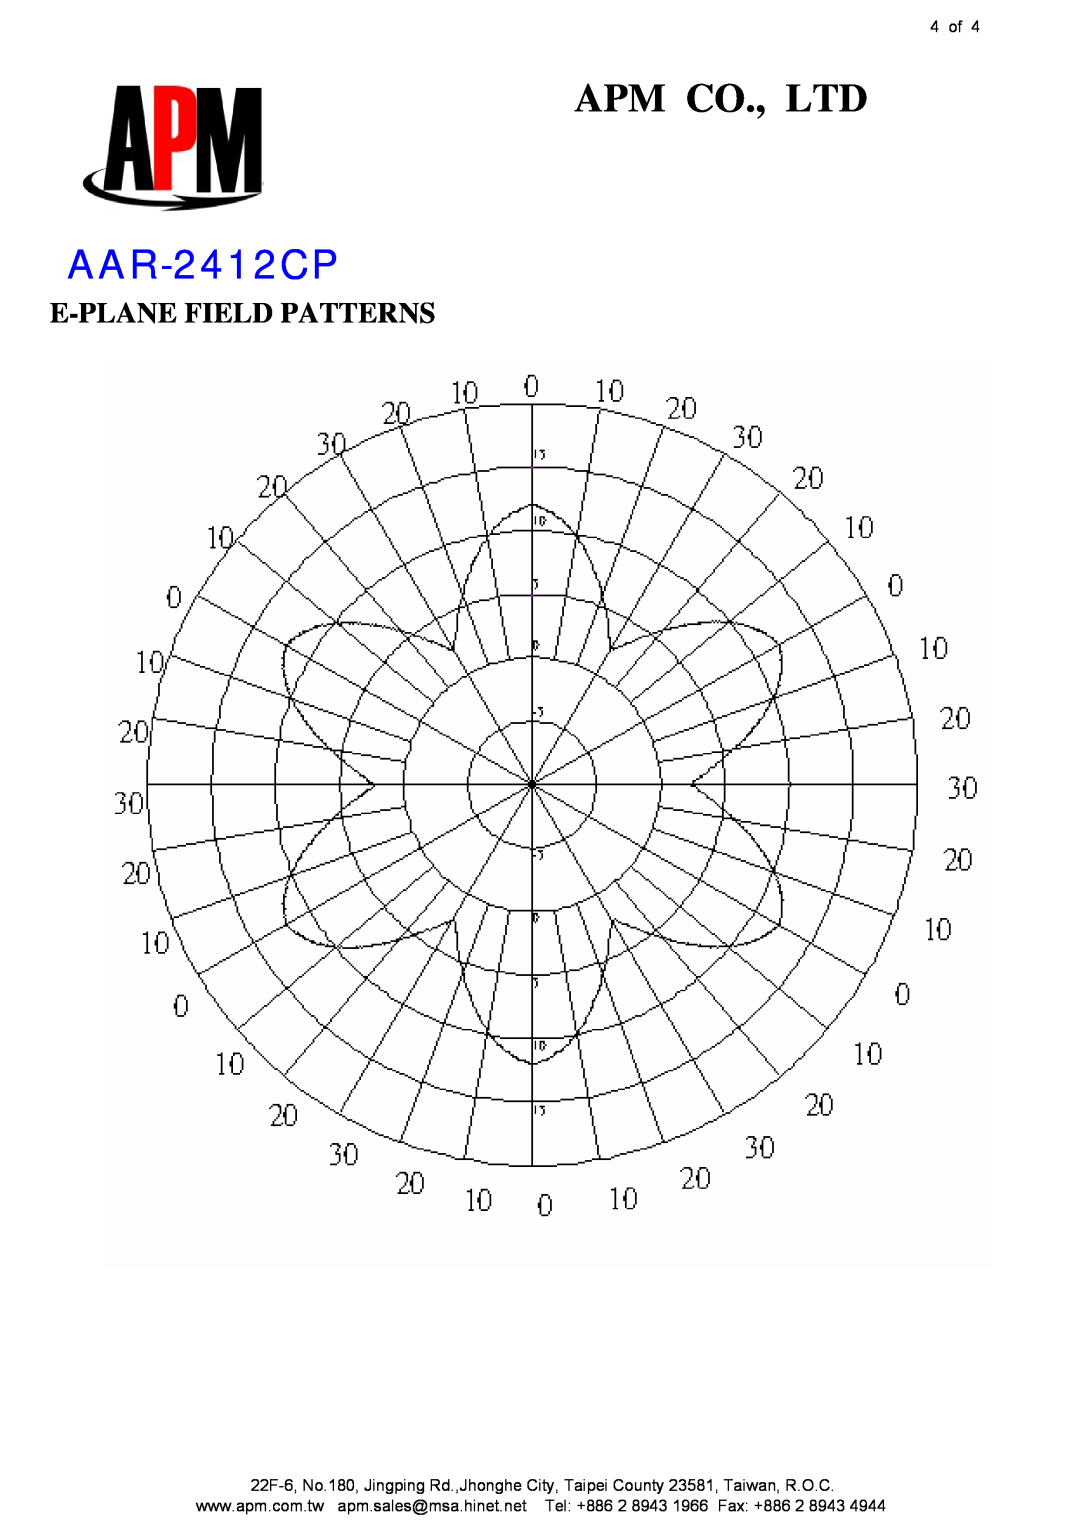 APM AAR-2412CP manual E-Planefield Patterns, 4 of 